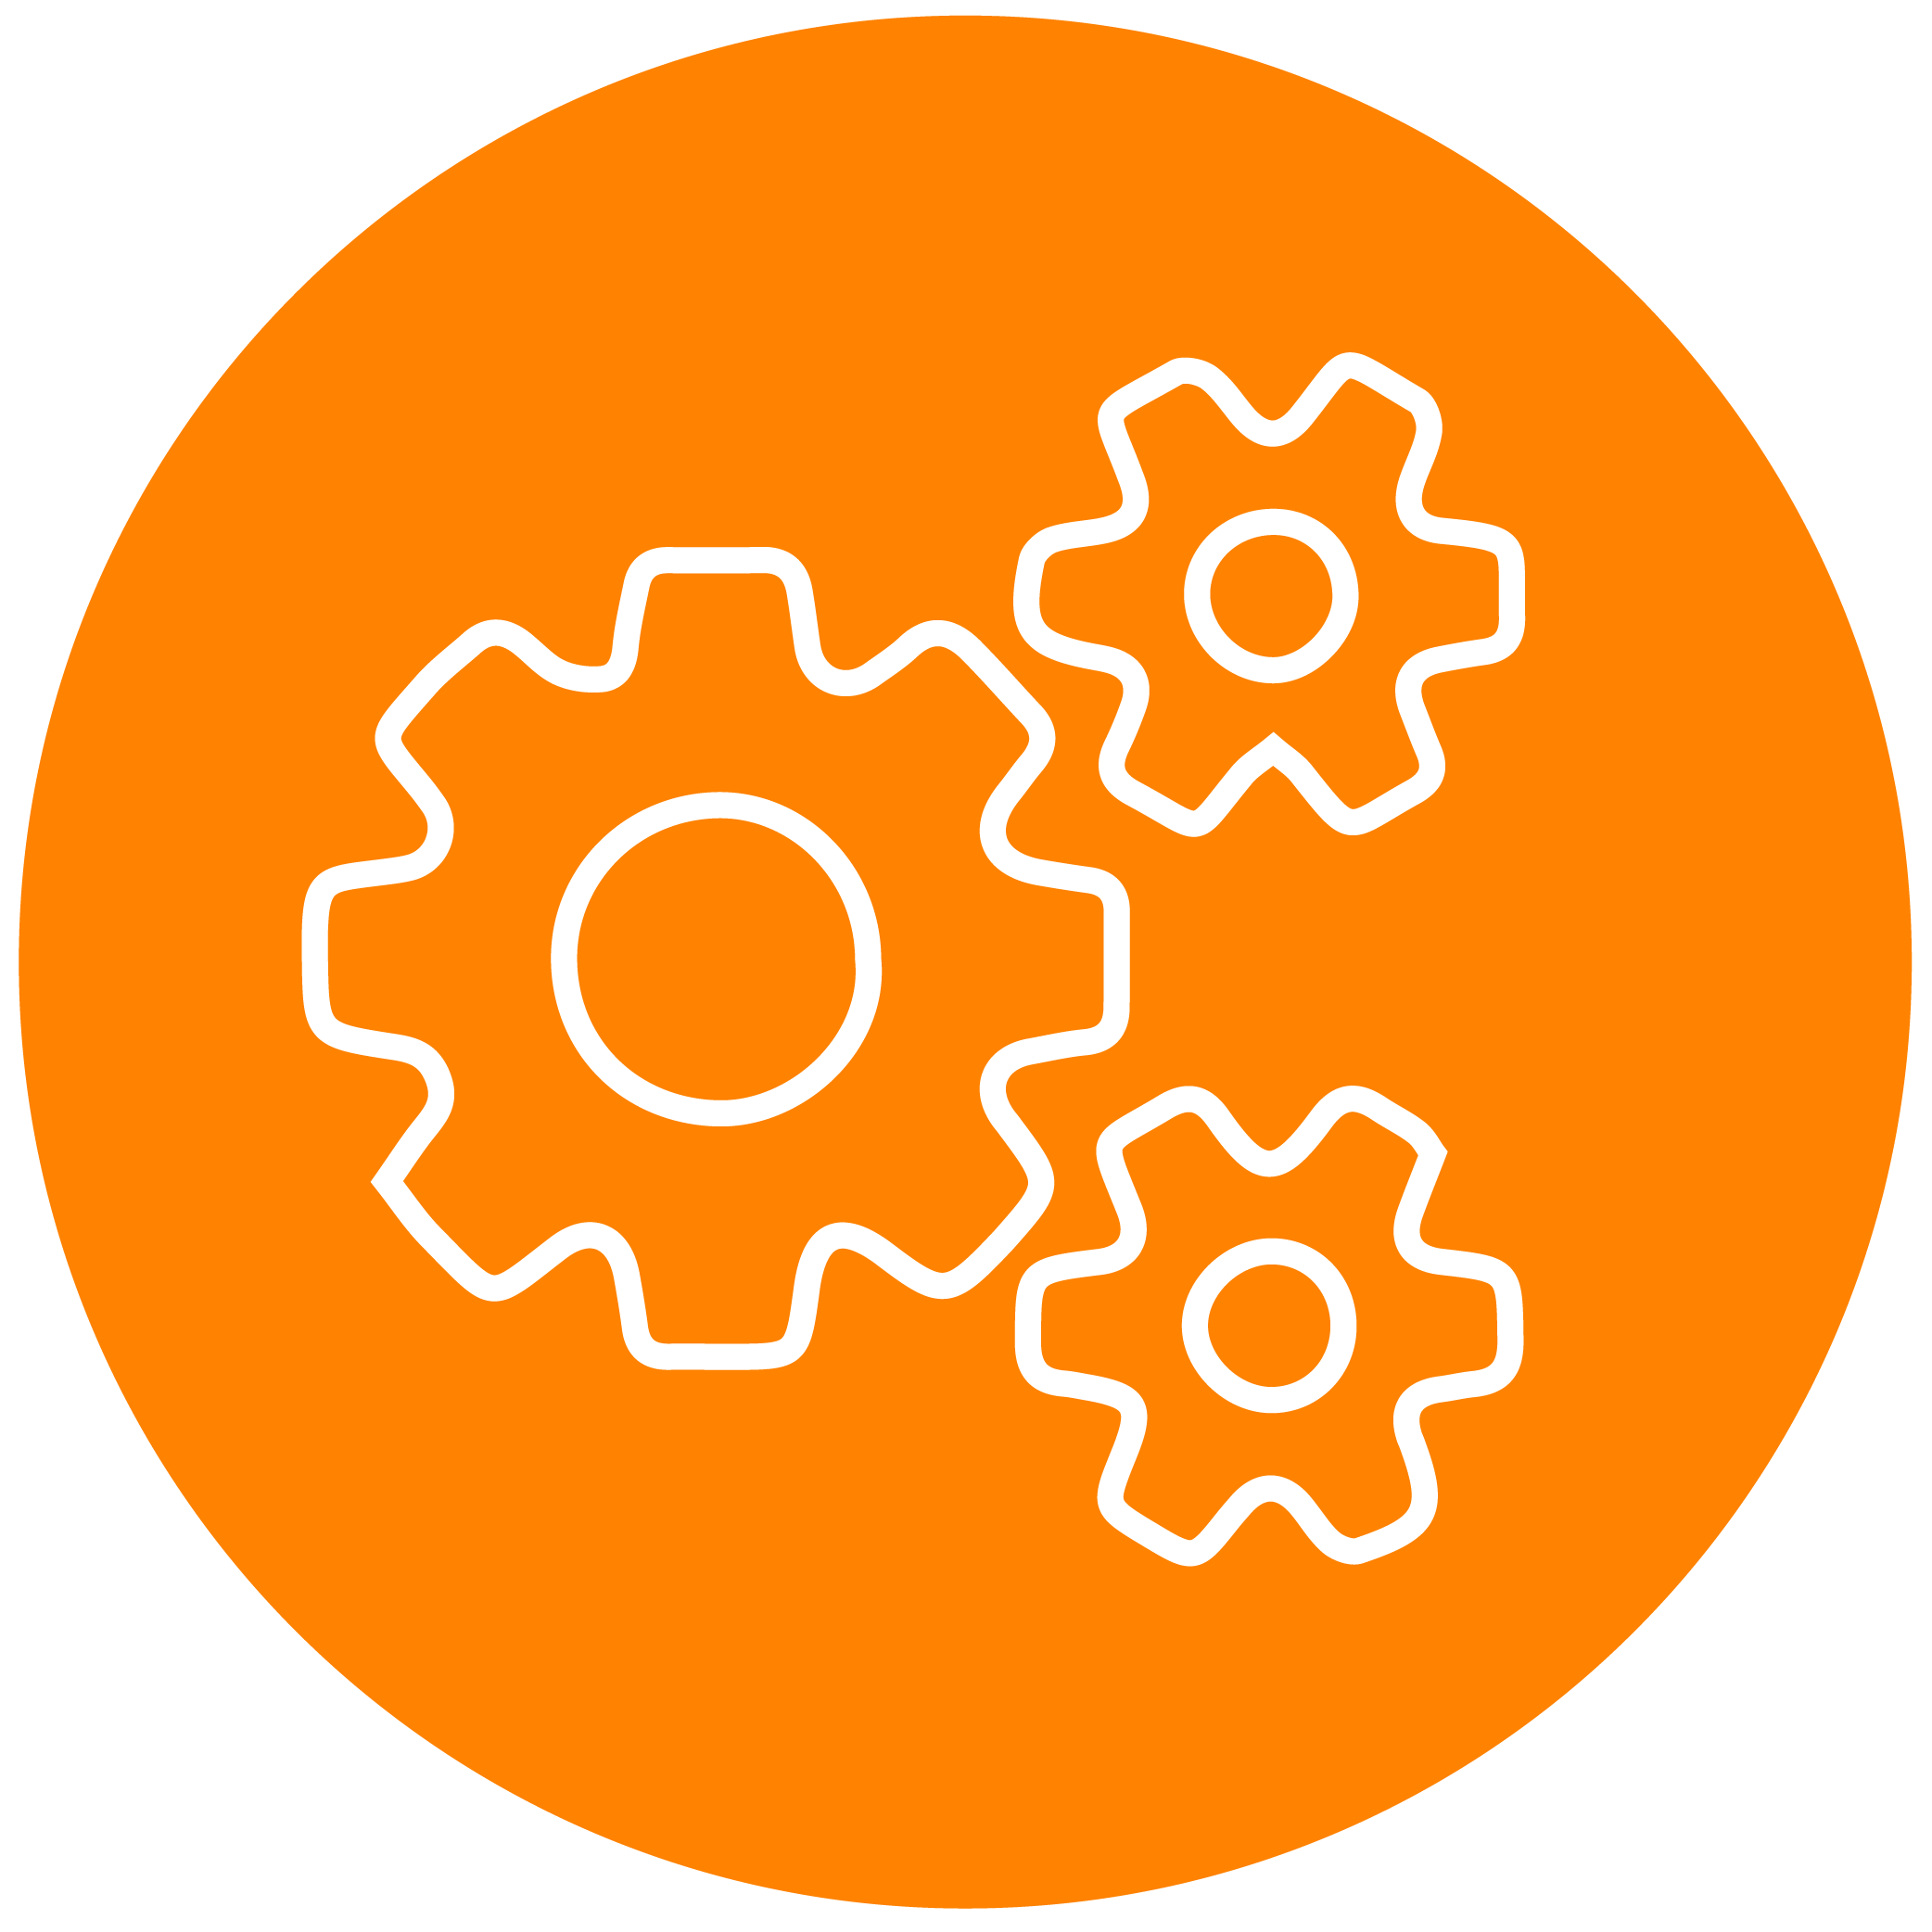 White gears icon on orange background